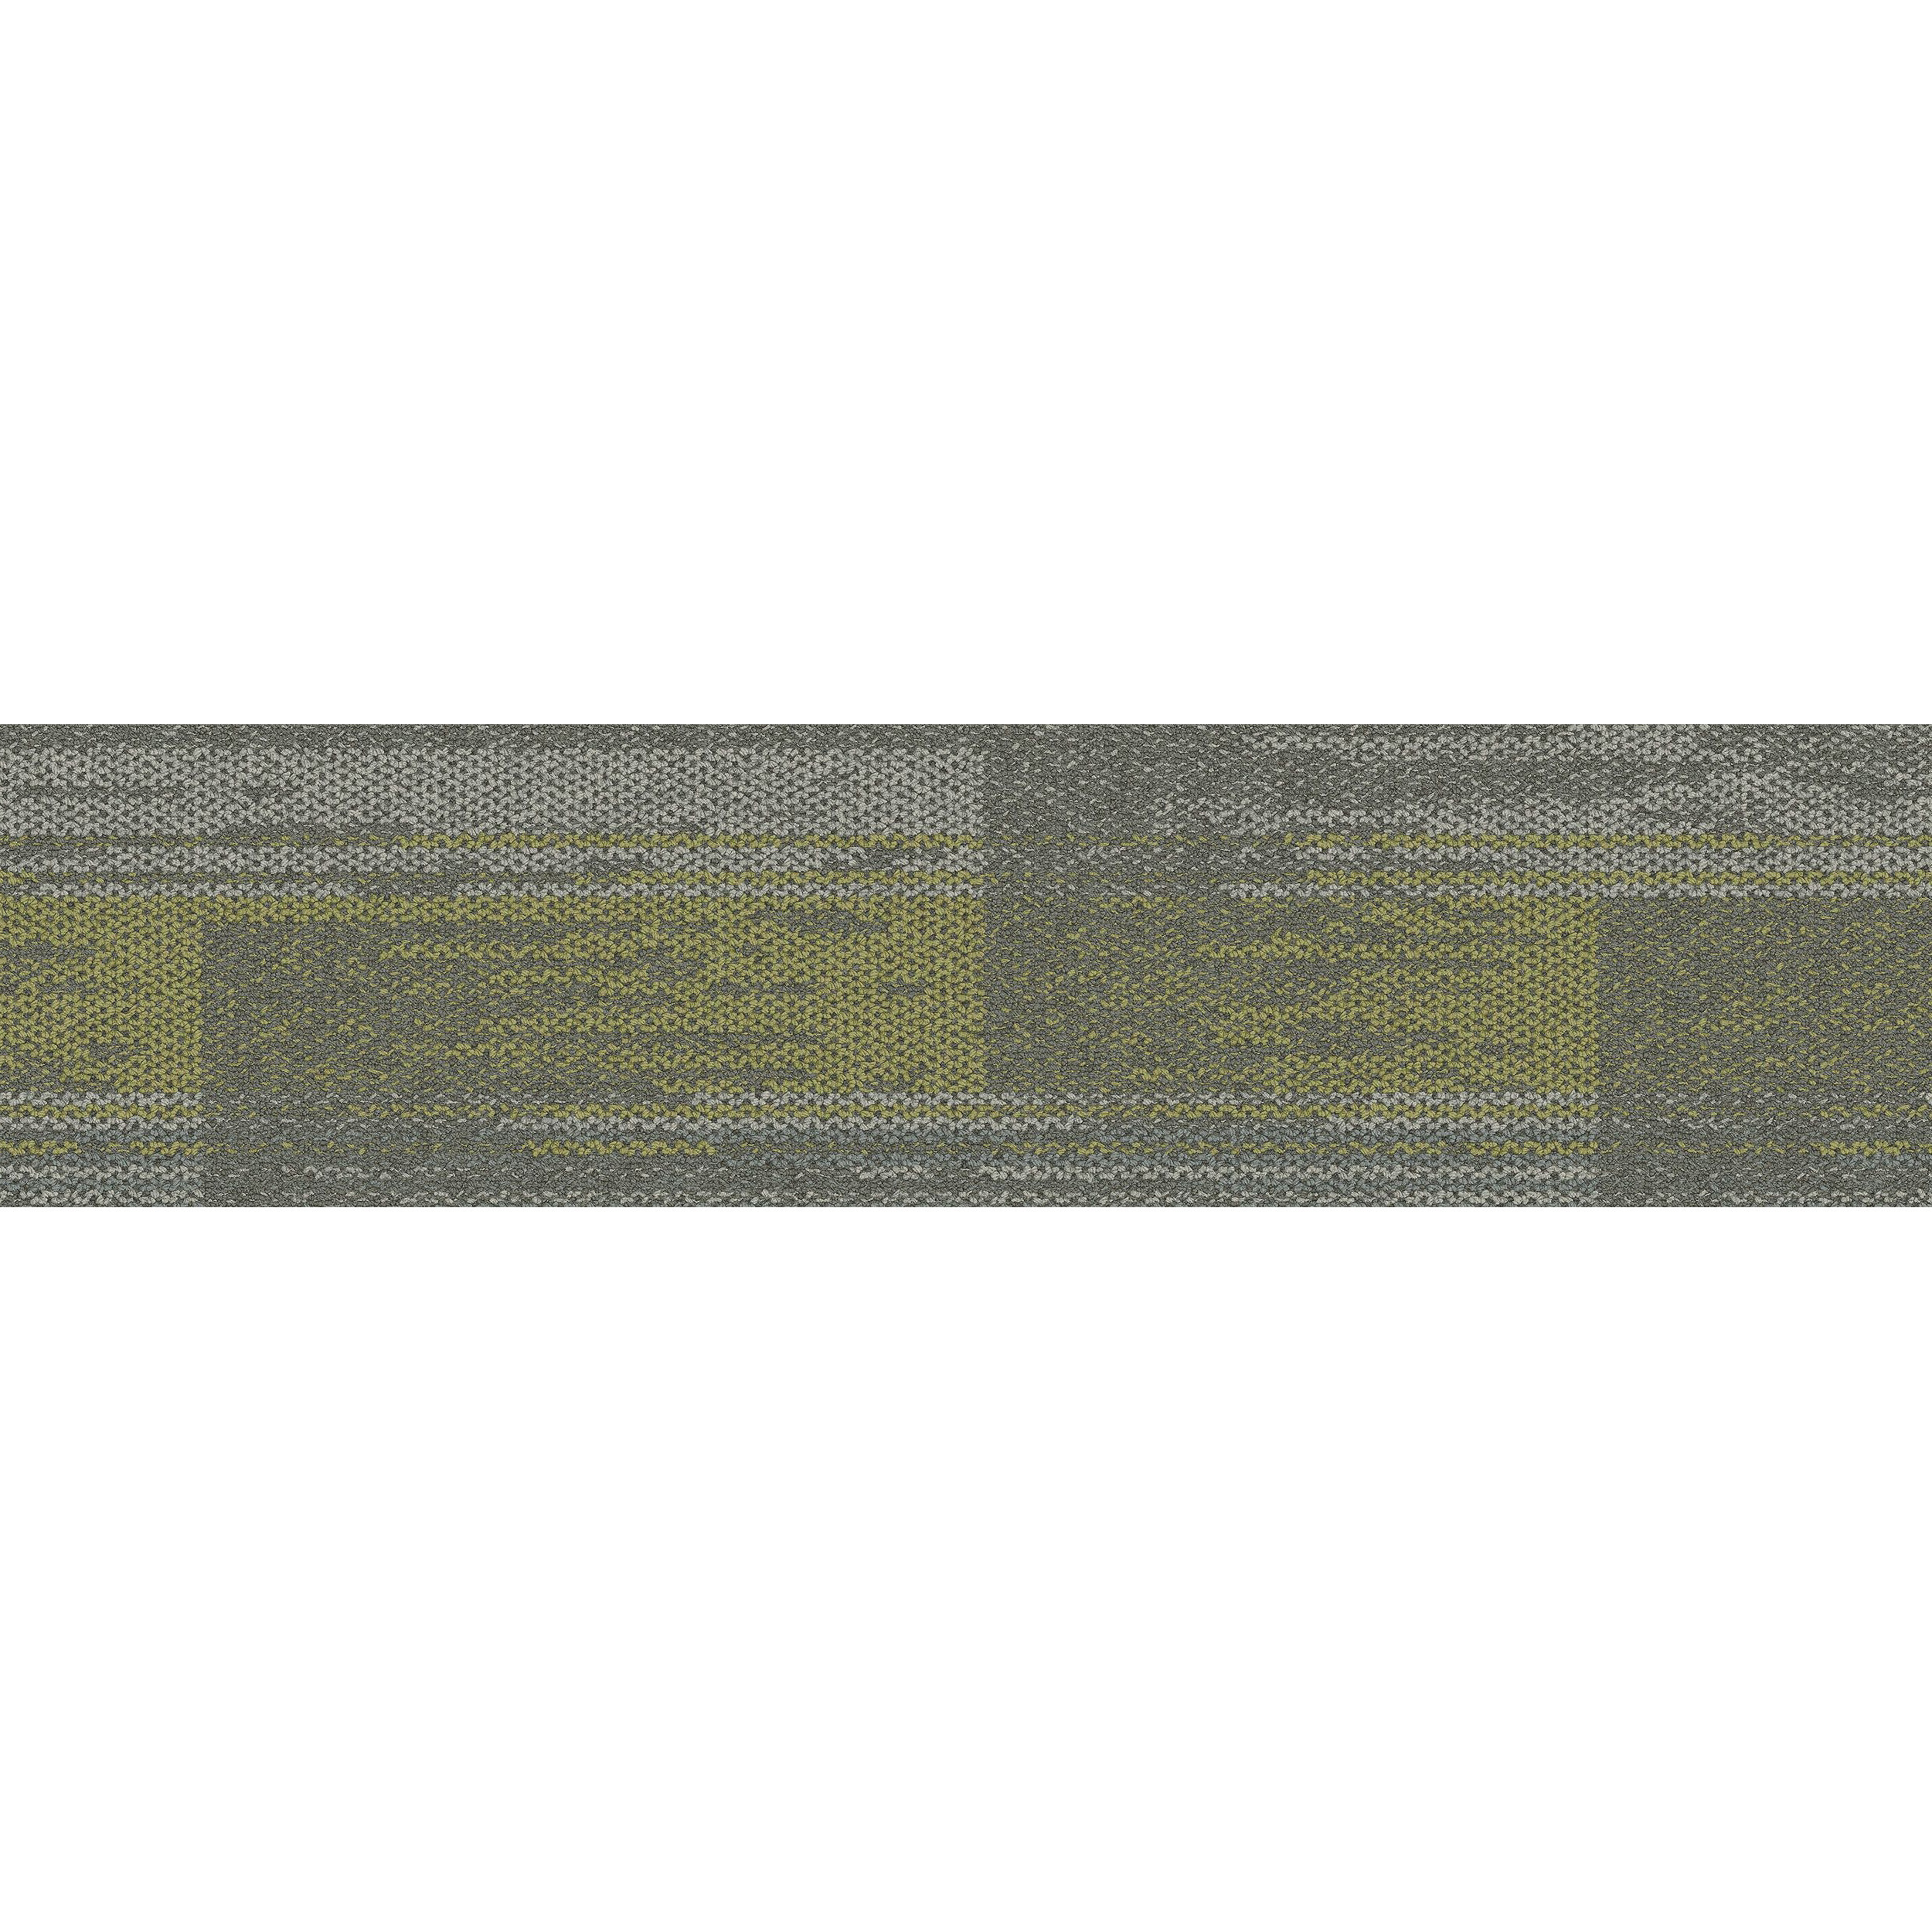 AE313 Carpet Tile In Mist/Aloe image number 6